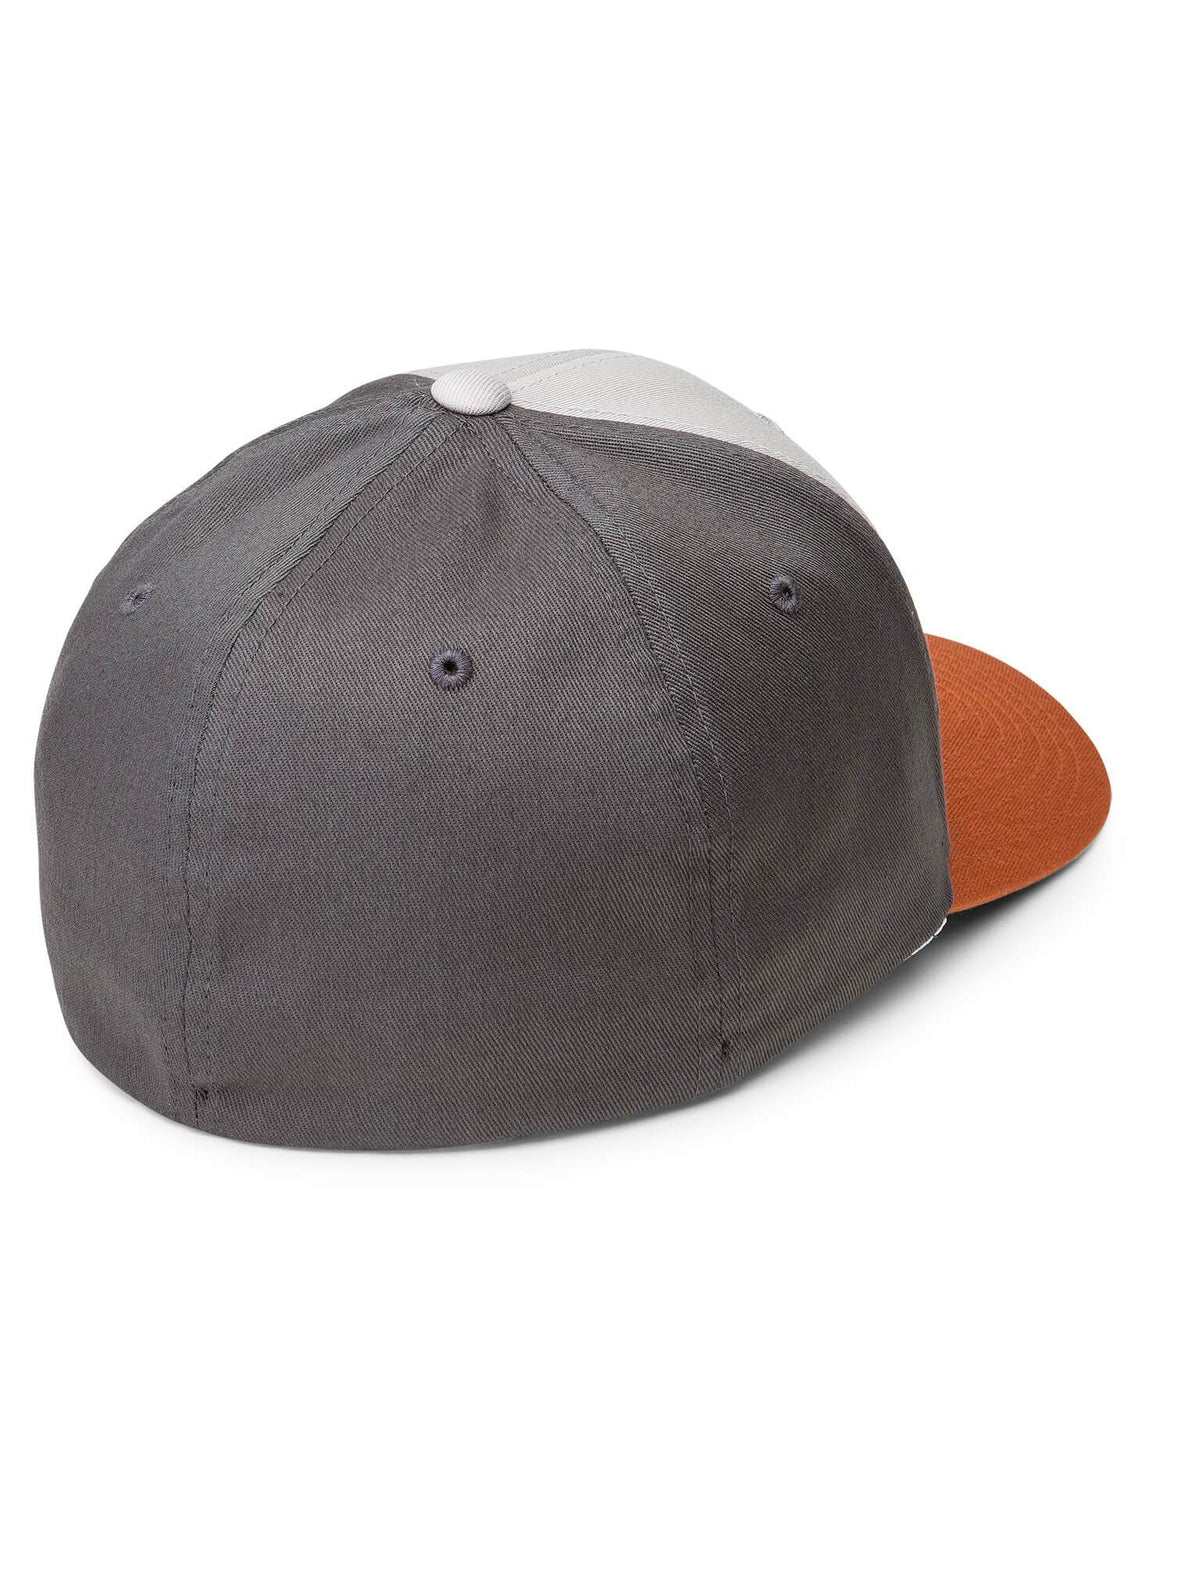 Little Boys Full Stone Xfit Hat In Copper, Second Alternate View